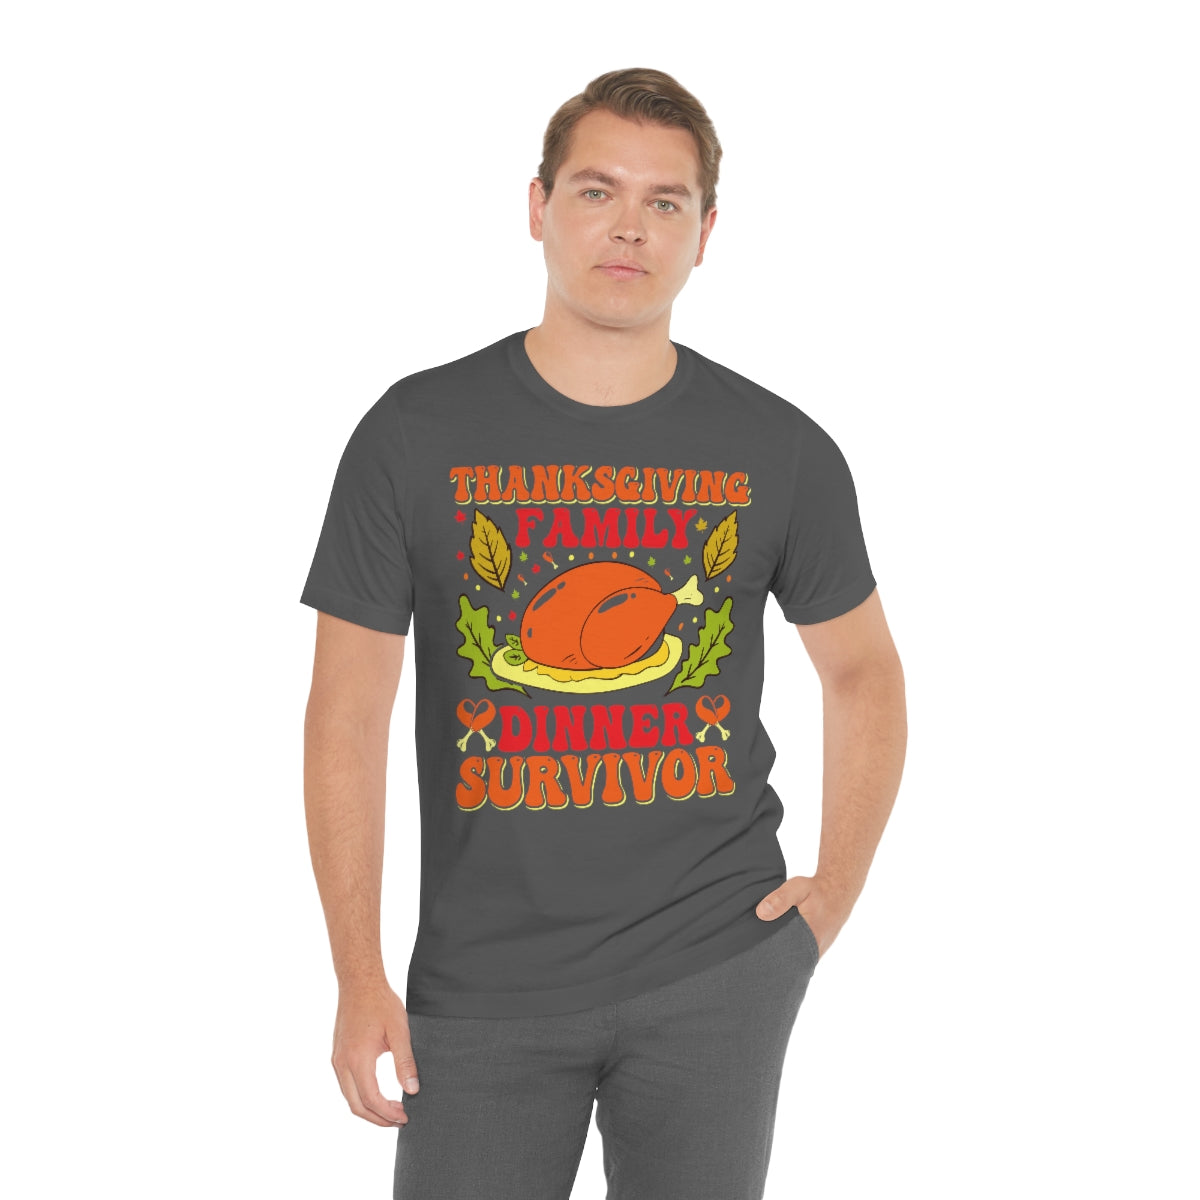 Thanksgiving Dinner Survivor Tshirt, Funny Turkey Family Men Women Adult Aesthetic Graphic Crewneck Tee Shirt Top Starcove Fashion